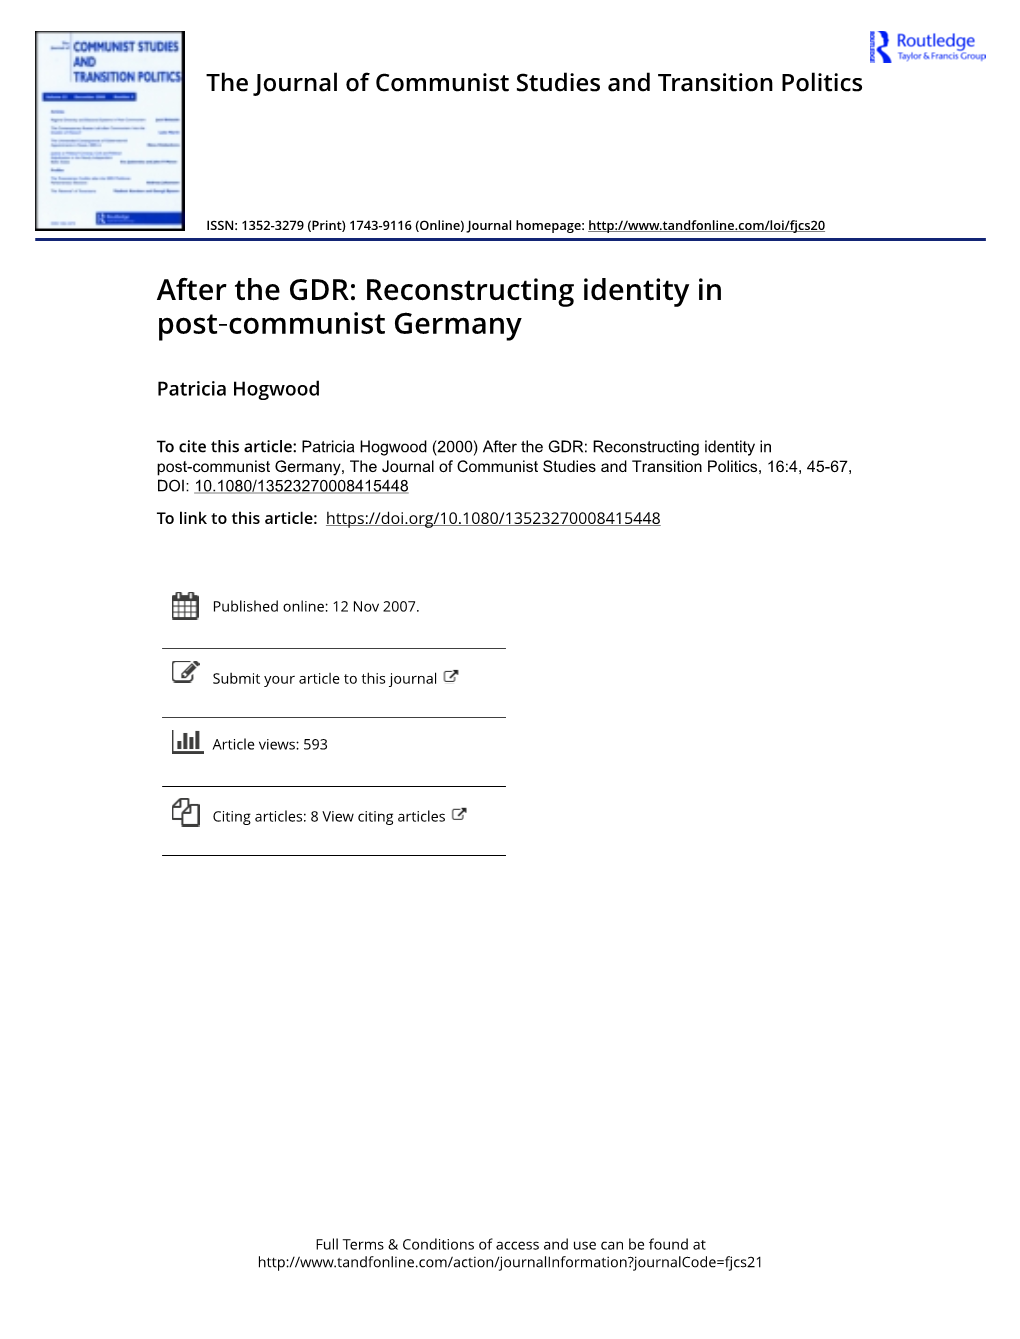 Reconstructing Identity in Post‐Communist Germany